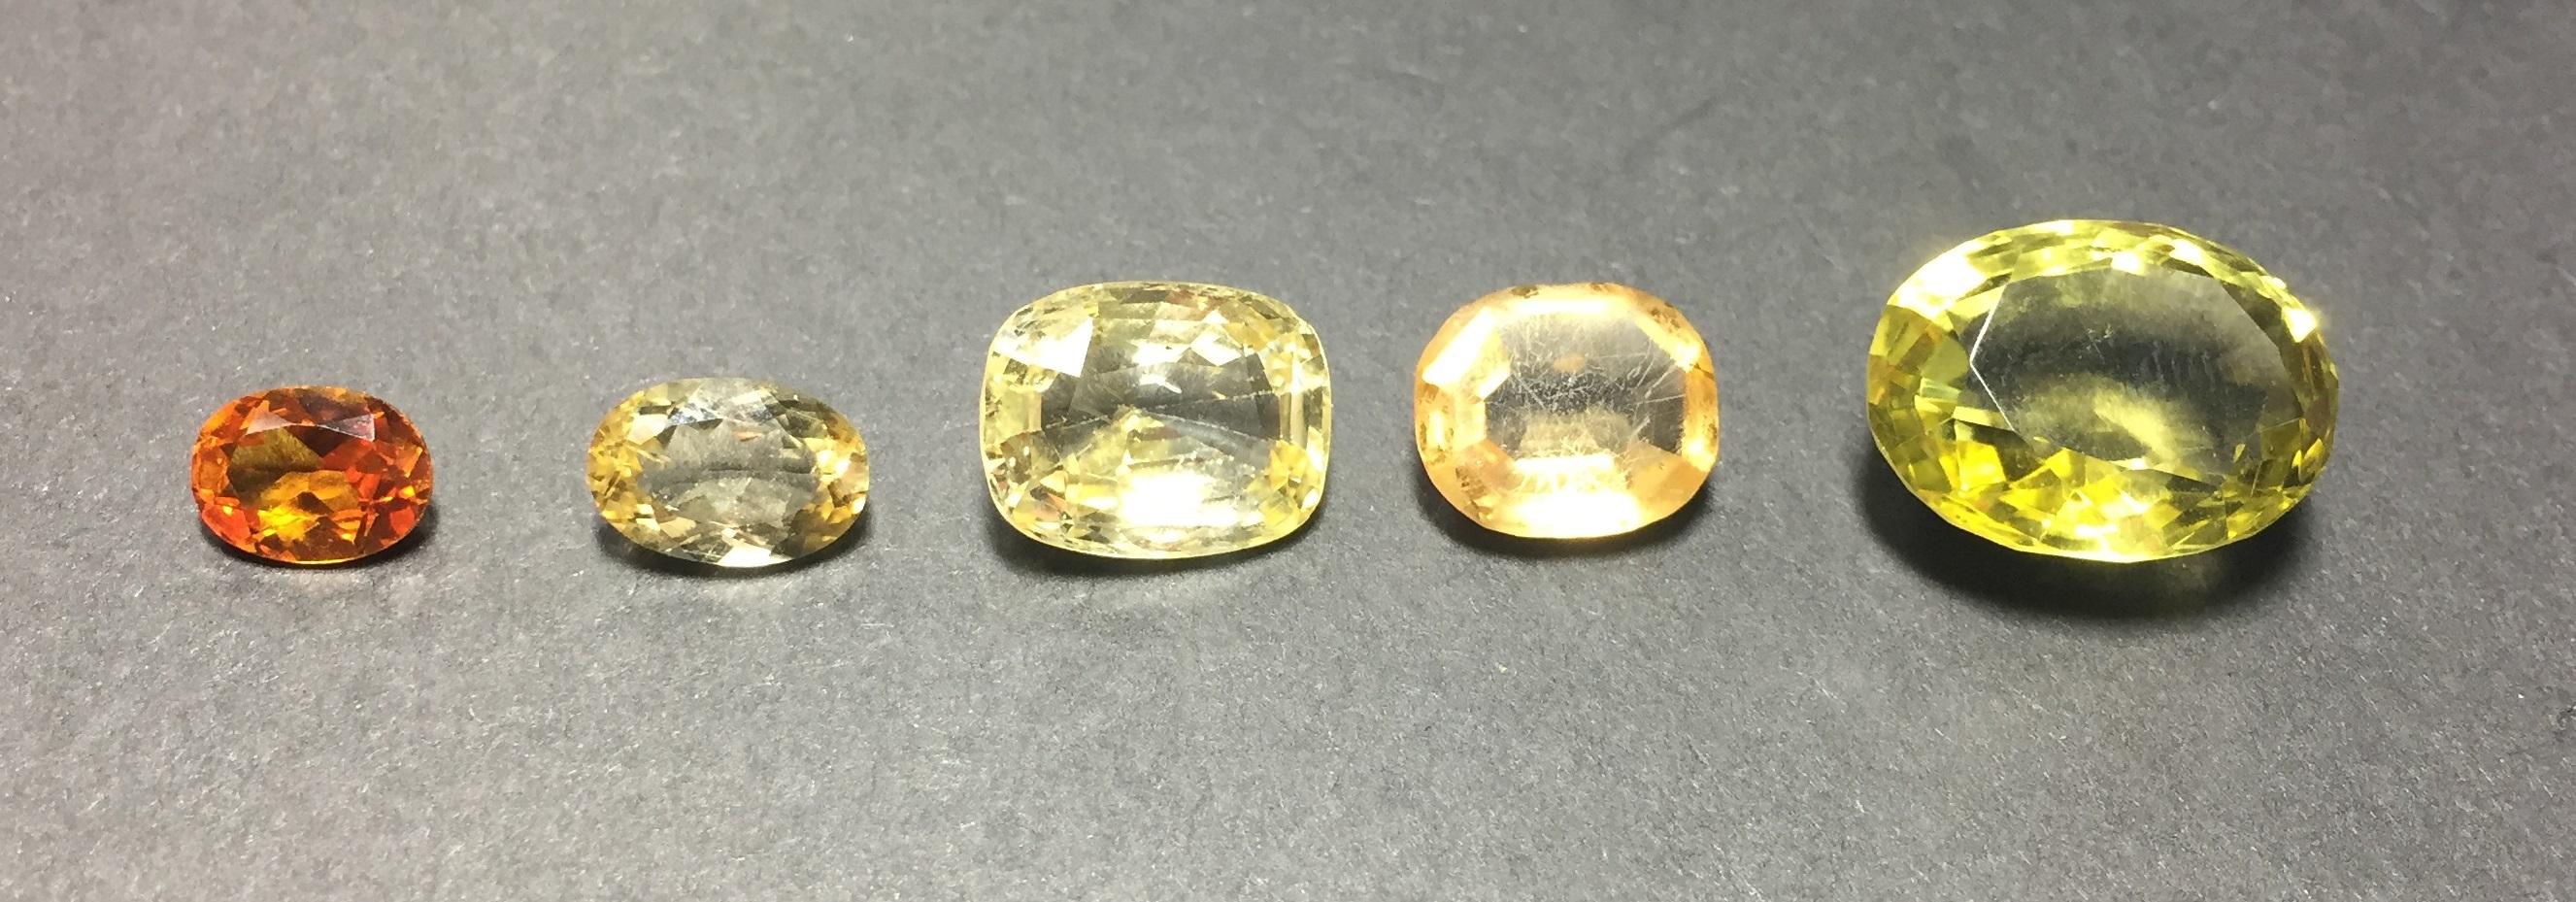 Diamond tester with uv ultraviolet light gemstone jewellry